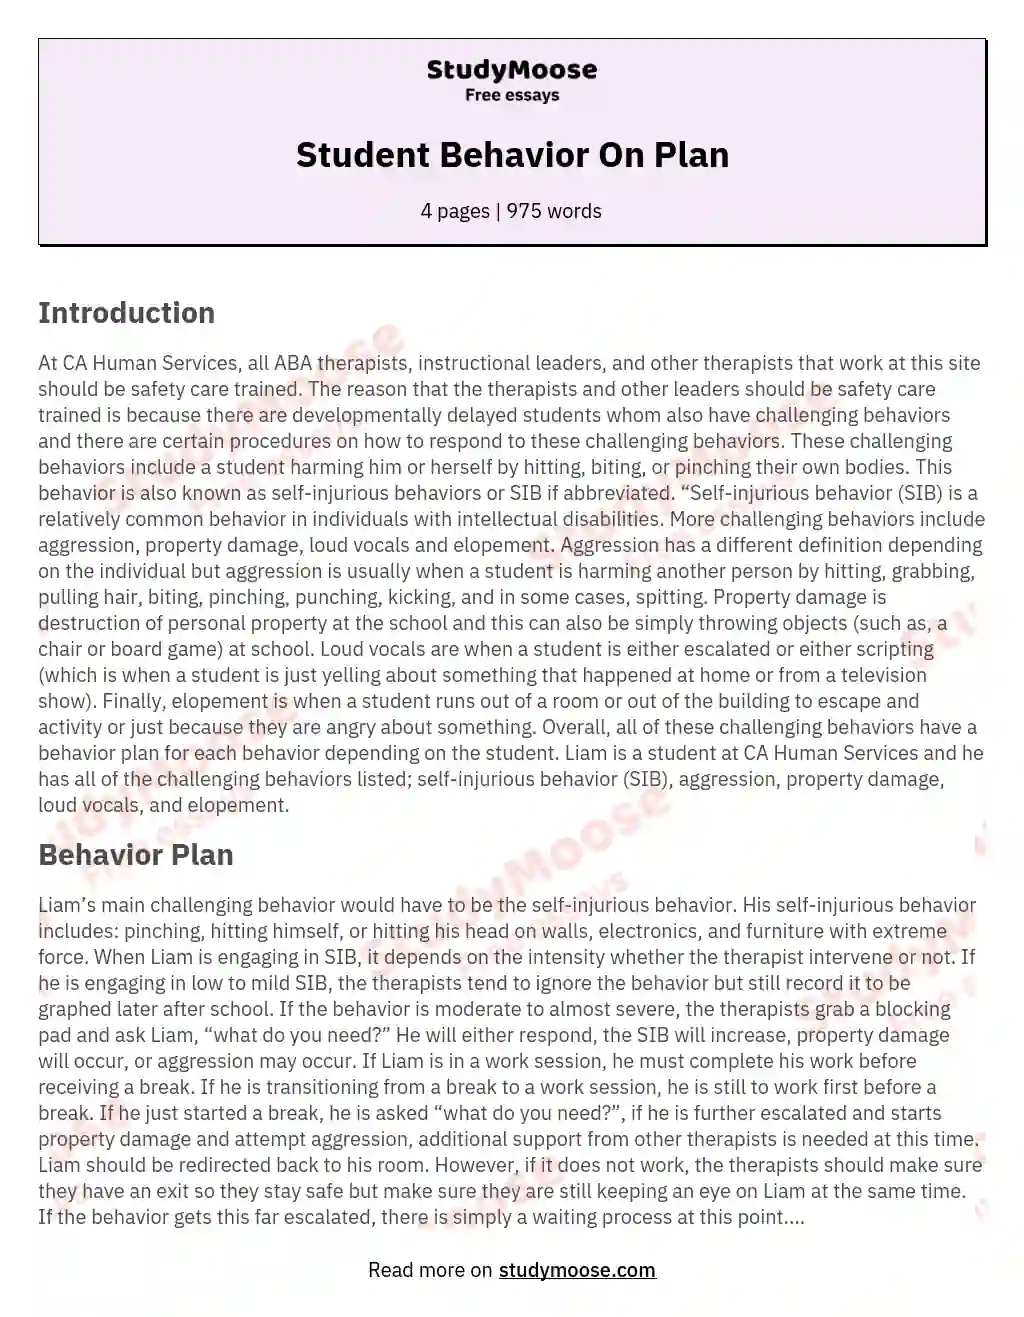 Student Behavior On Plan essay